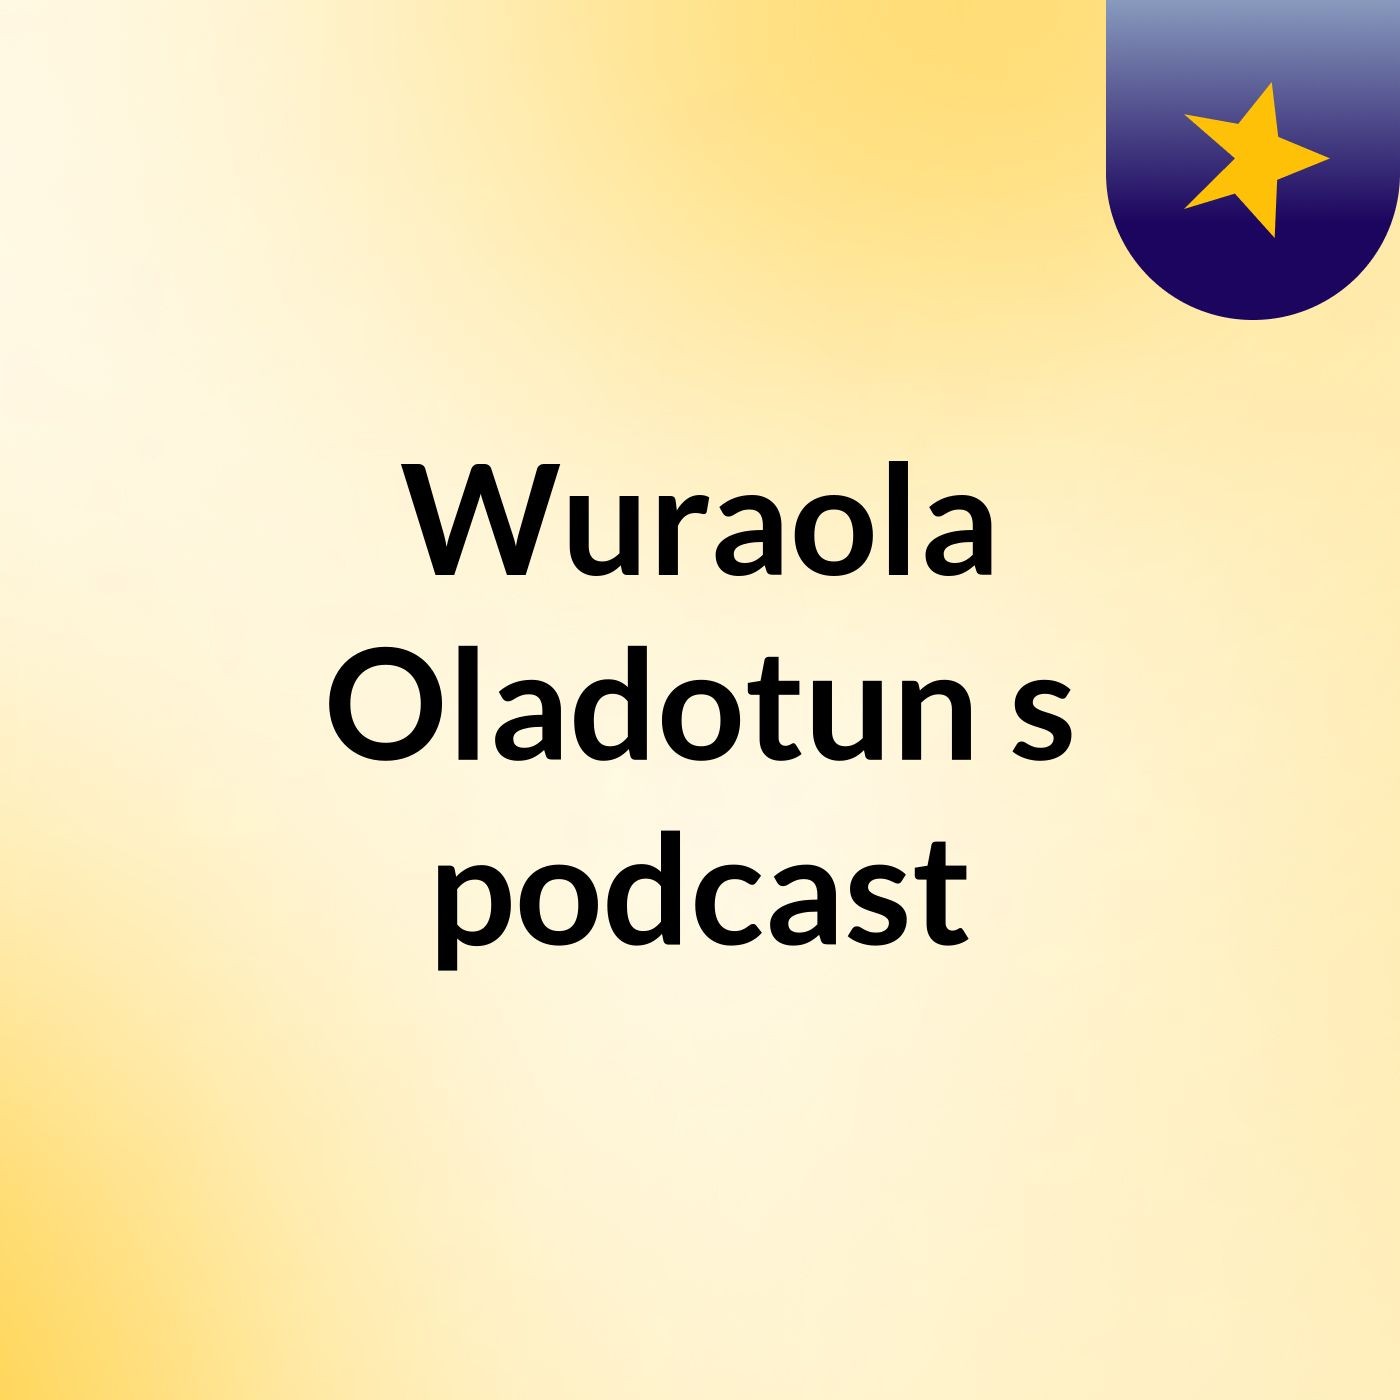 Episode 13 - Wuraola Oladotun's podcast